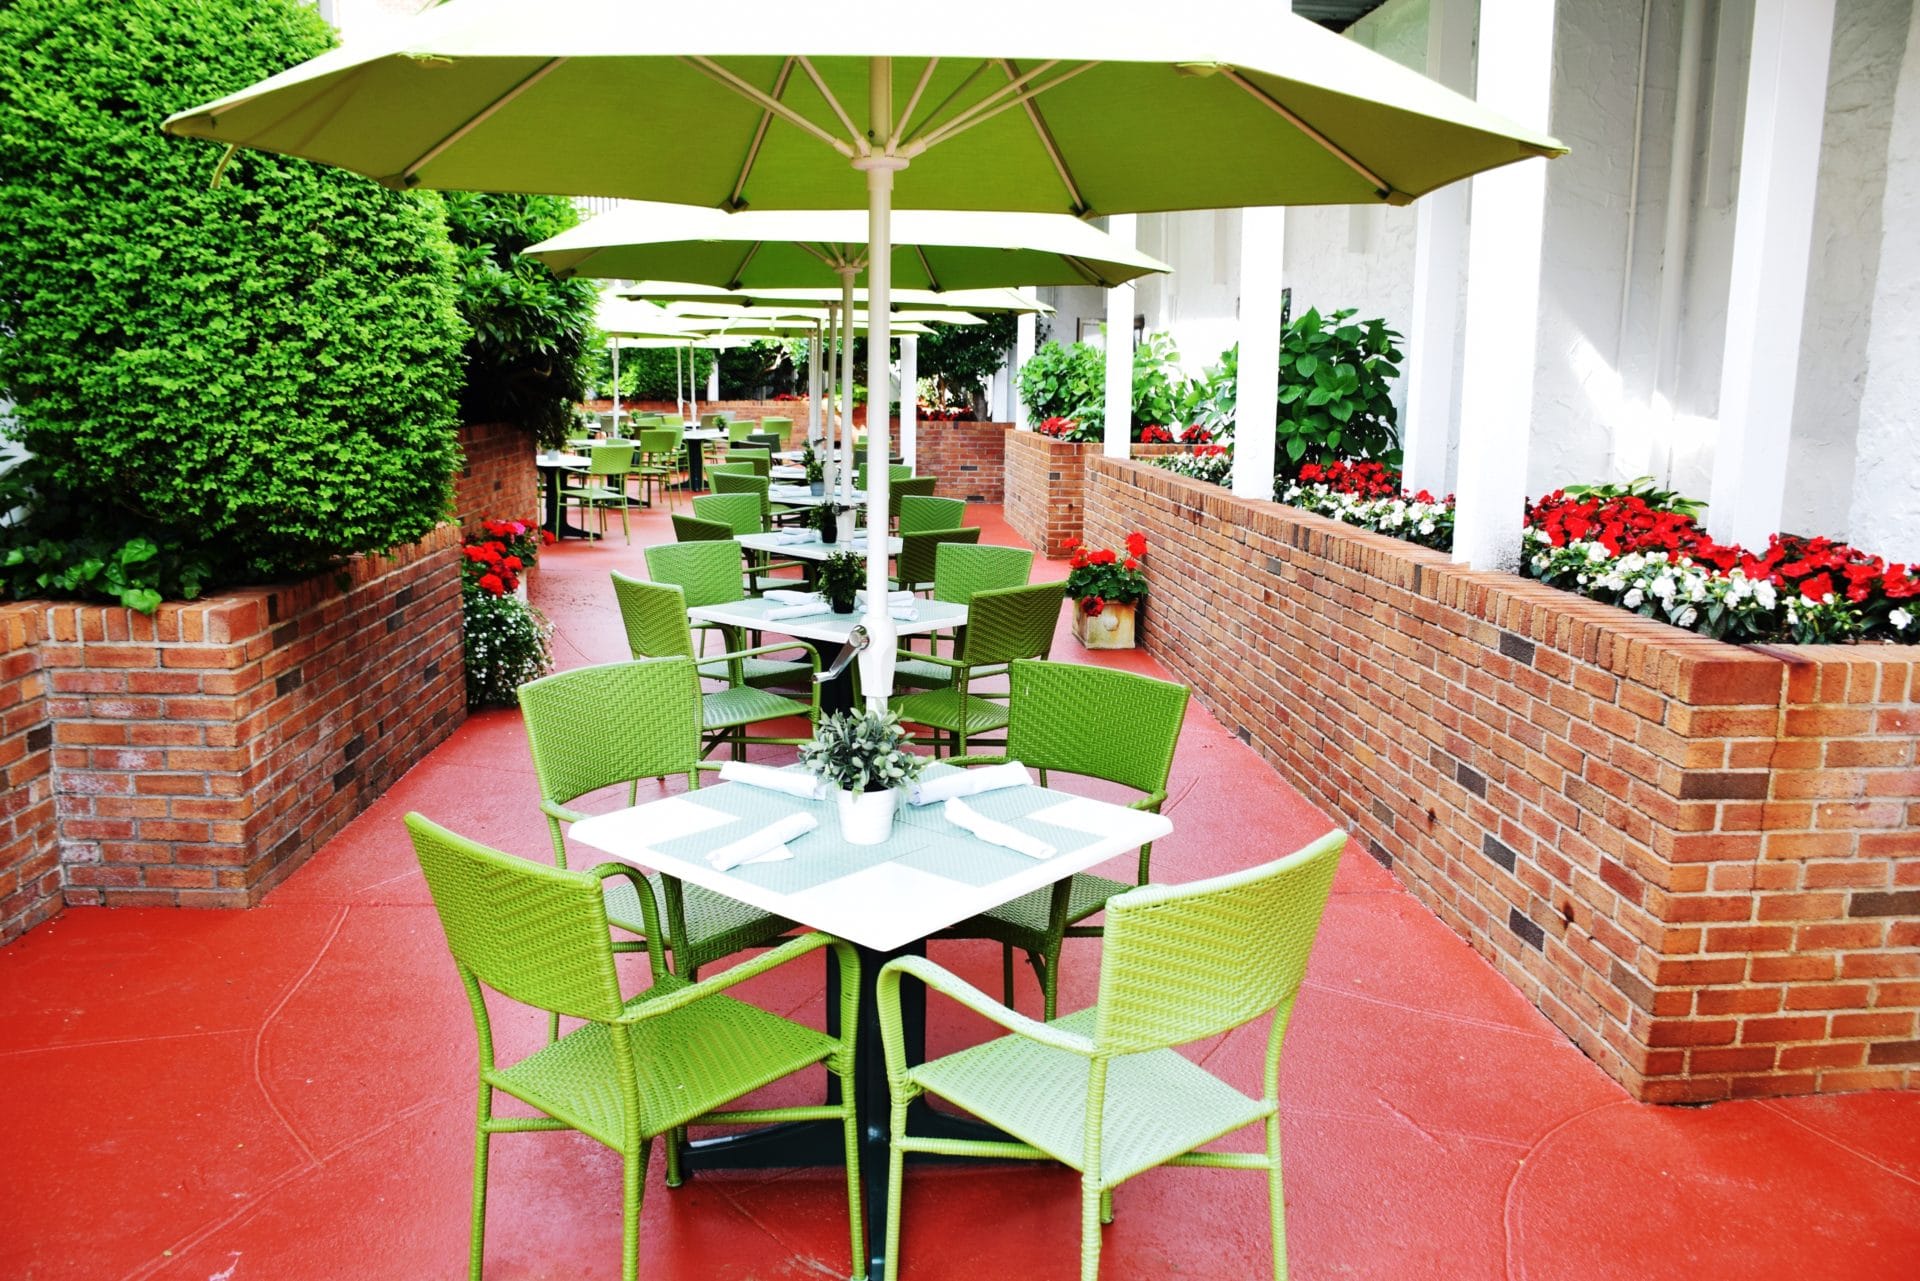 Southampton Inn has a new patio in its courtyard 